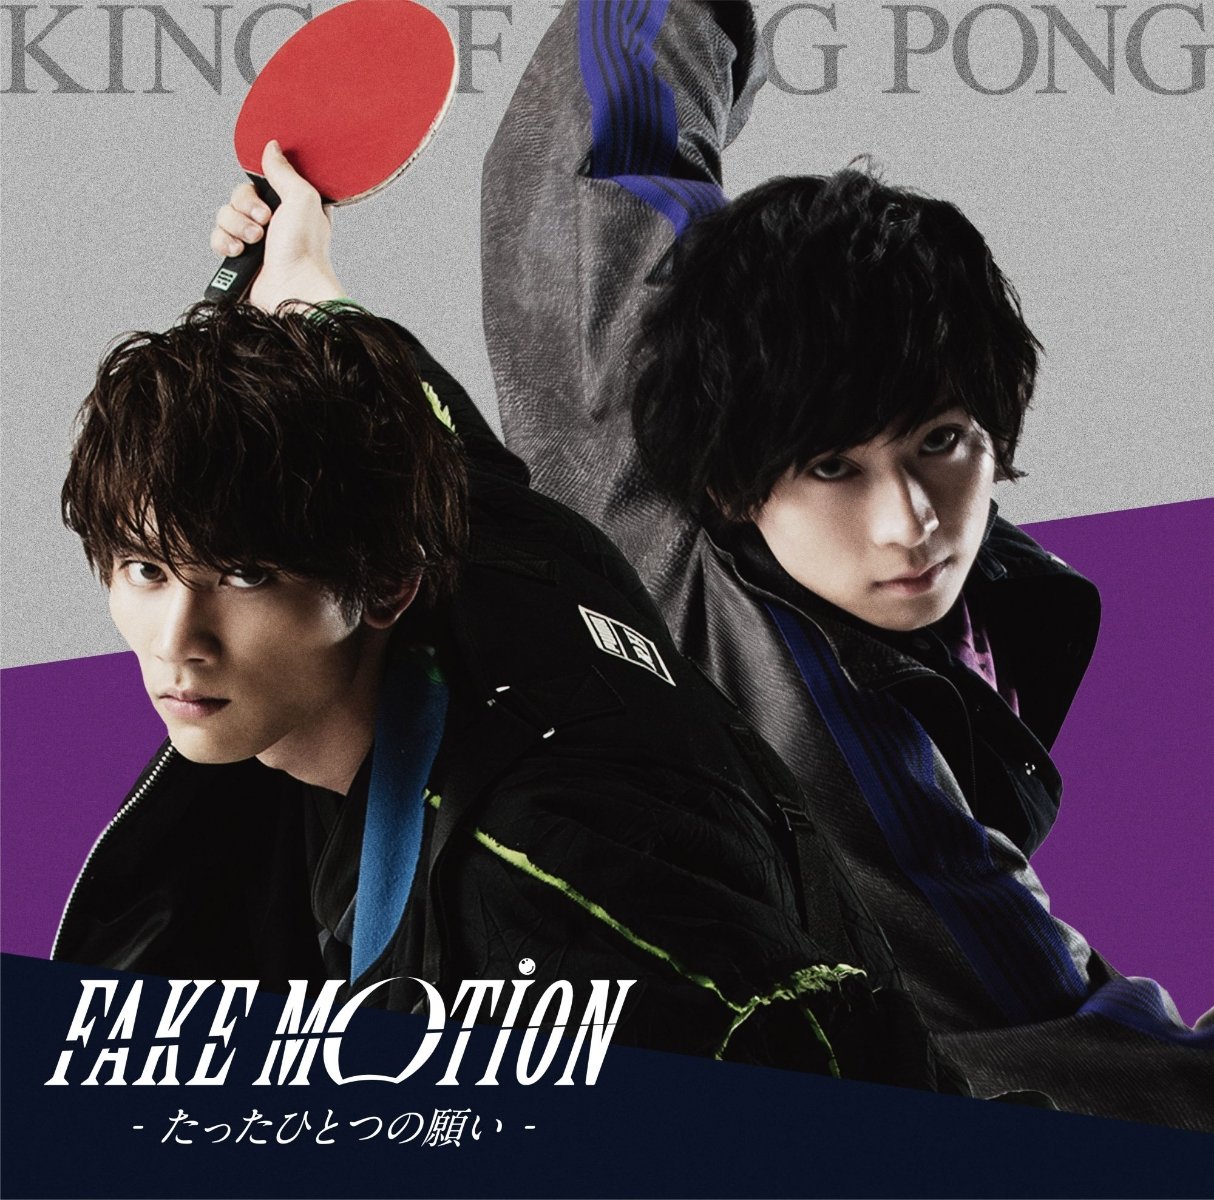 CD Shop - KING OF PING PONG FAKE MOTION -TATTA HITOTSU NO NEGAI-